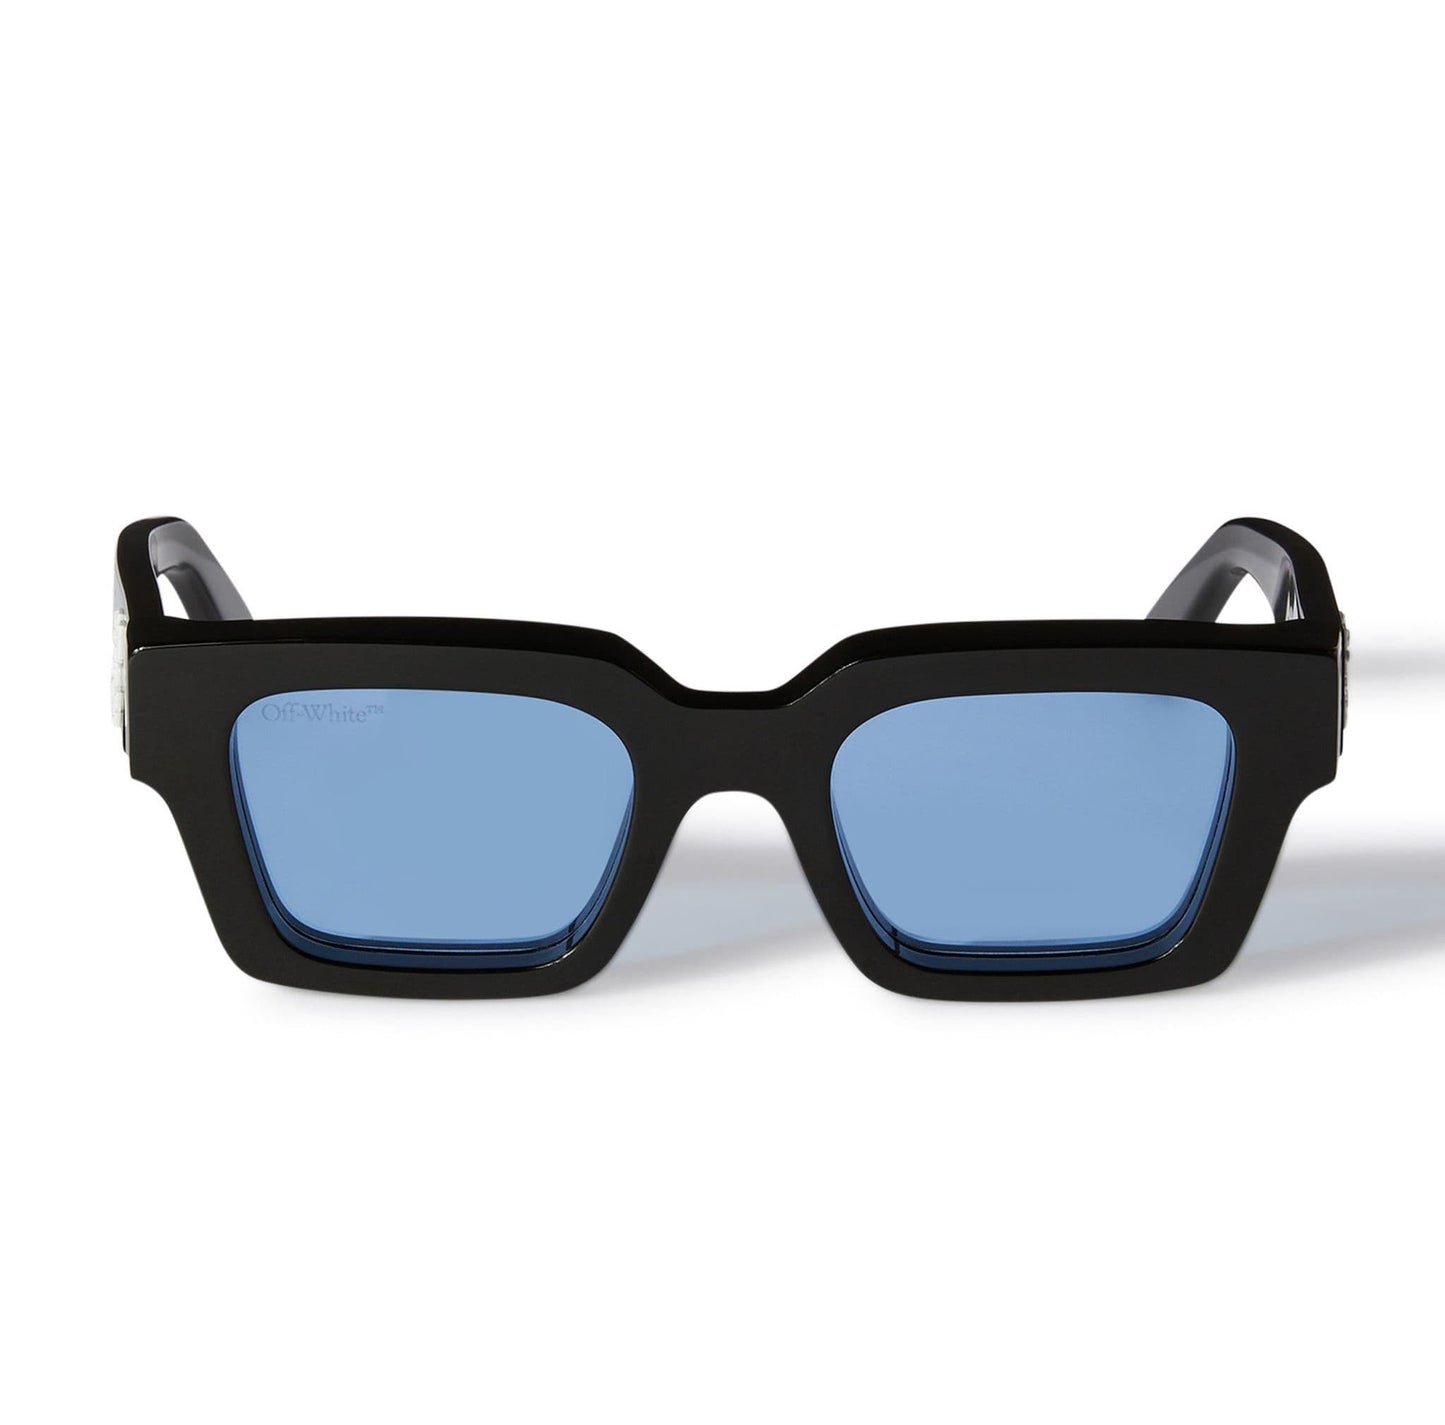 Off-White OERI008C99-PLA0021045-50 50mm New Sunglasses